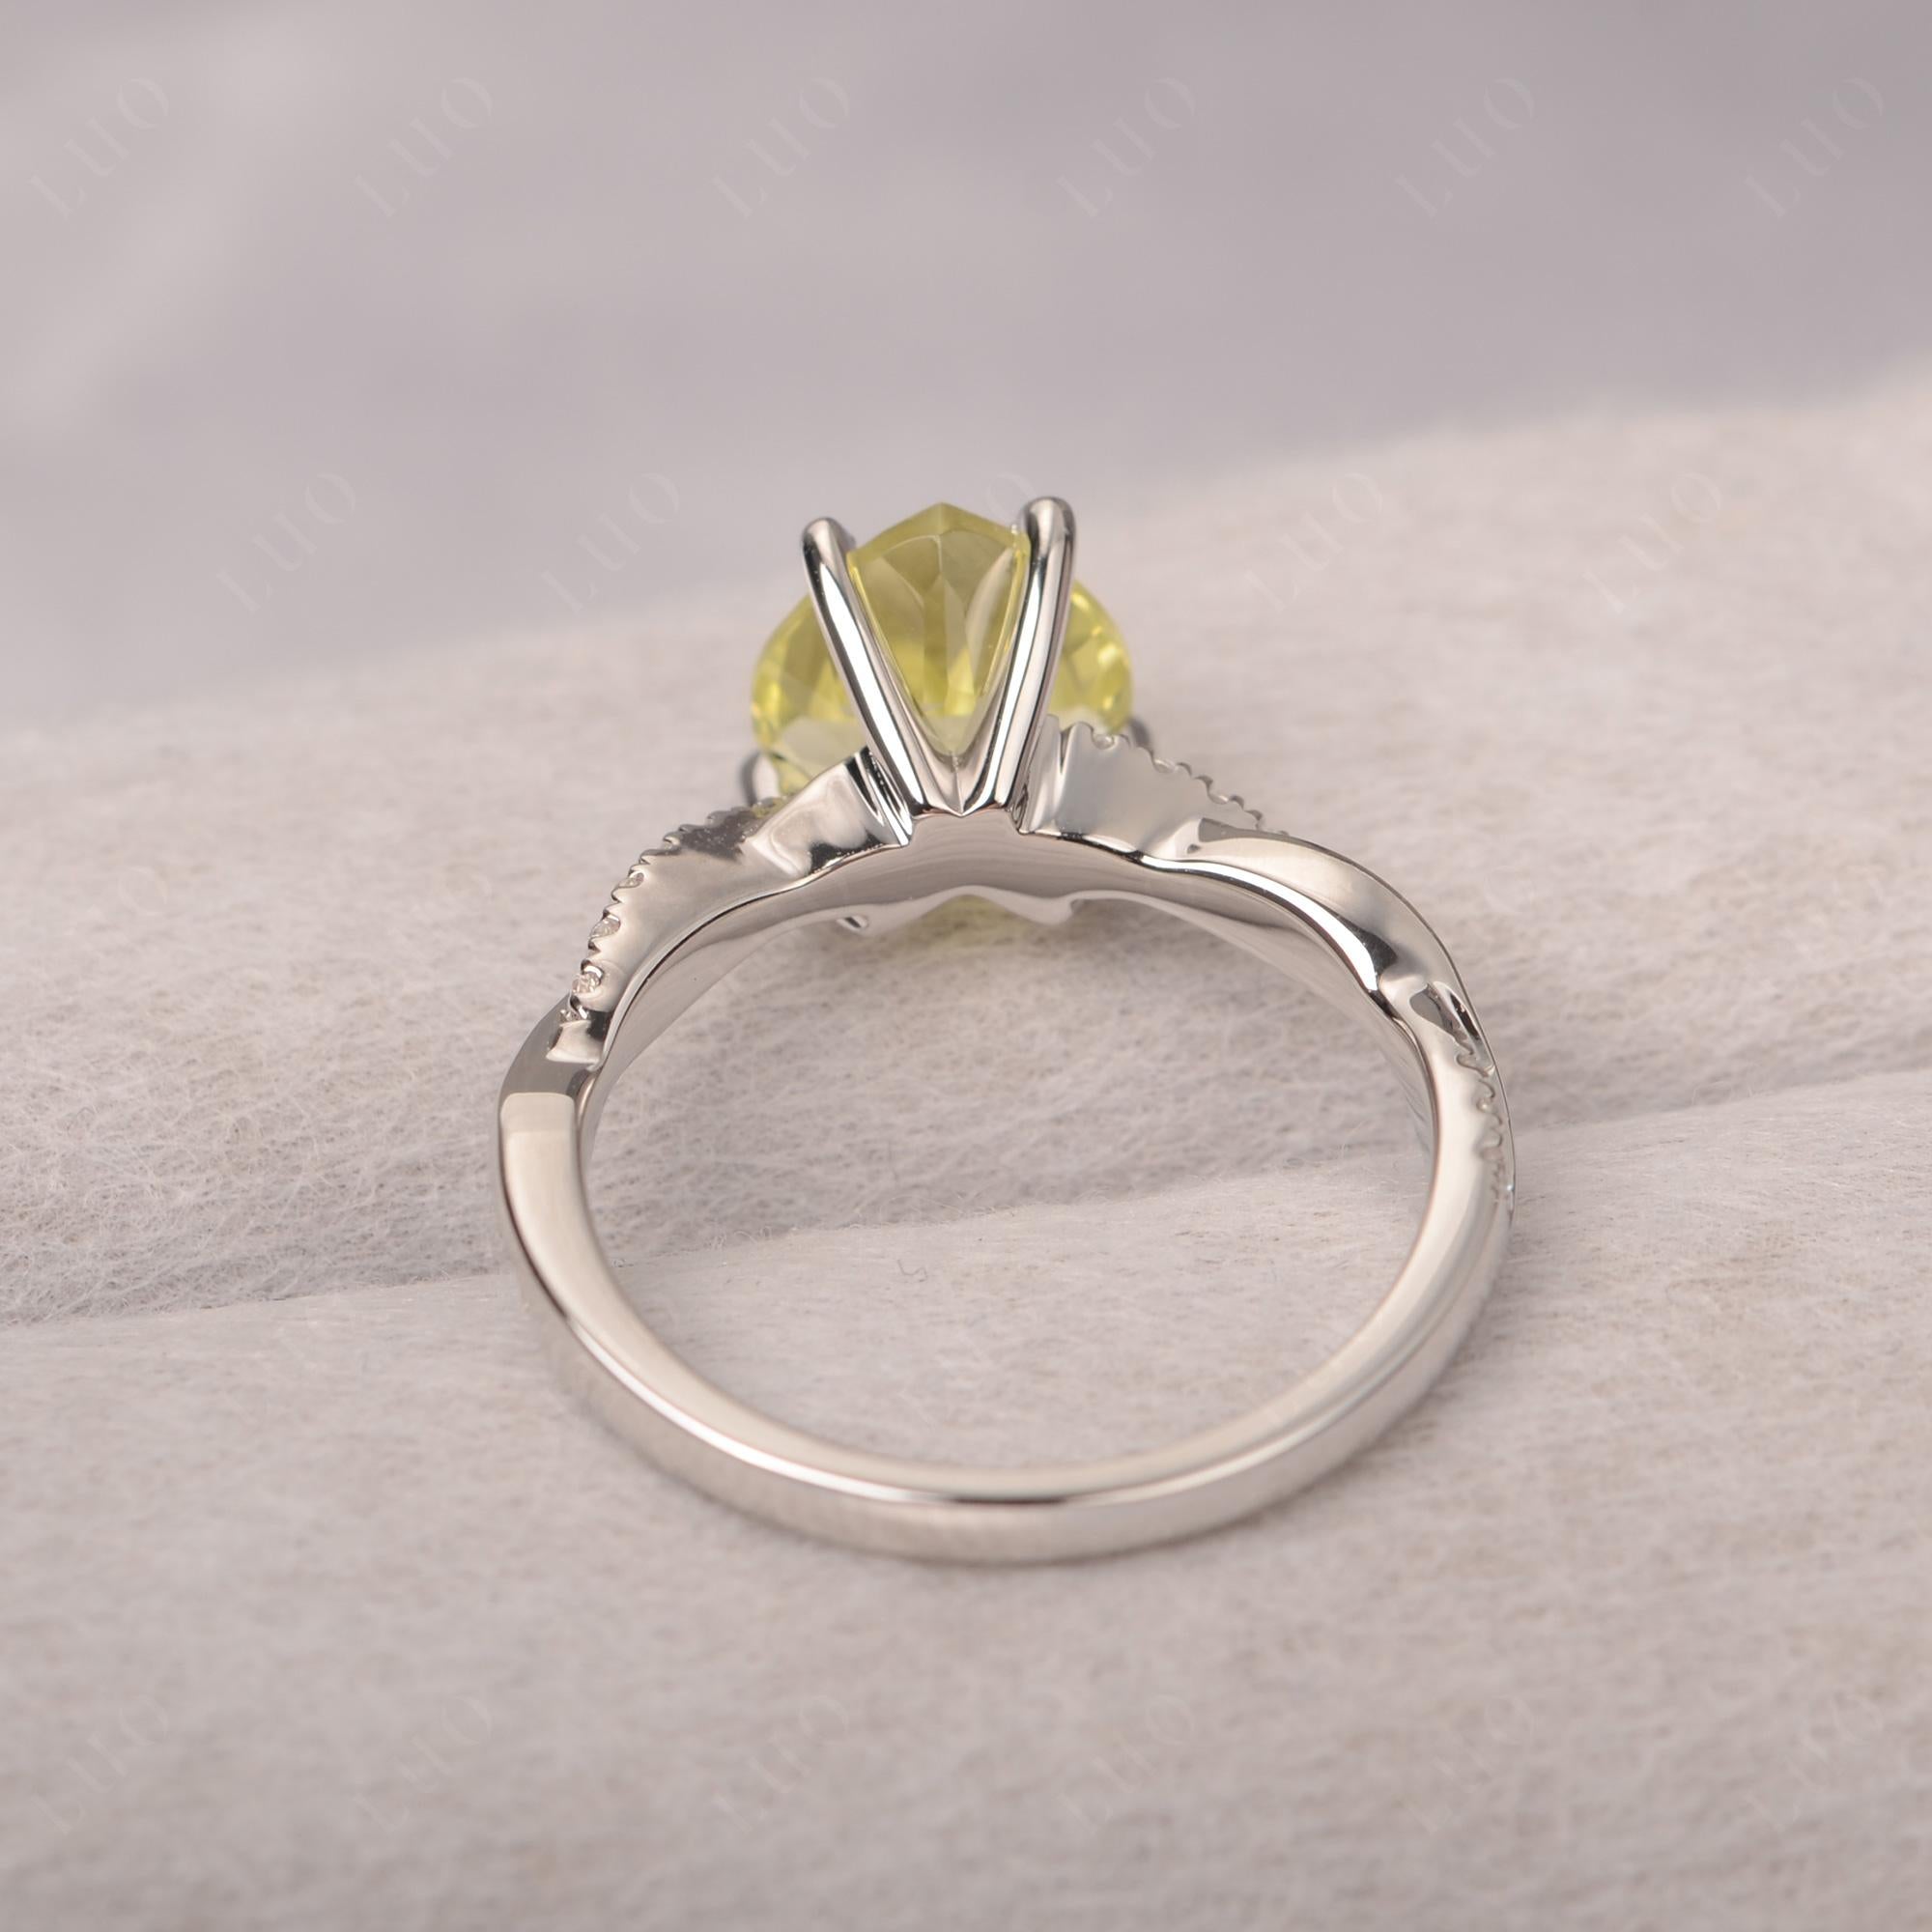 Twisted Heart Shaped Lemon Quartz Ring - LUO Jewelry